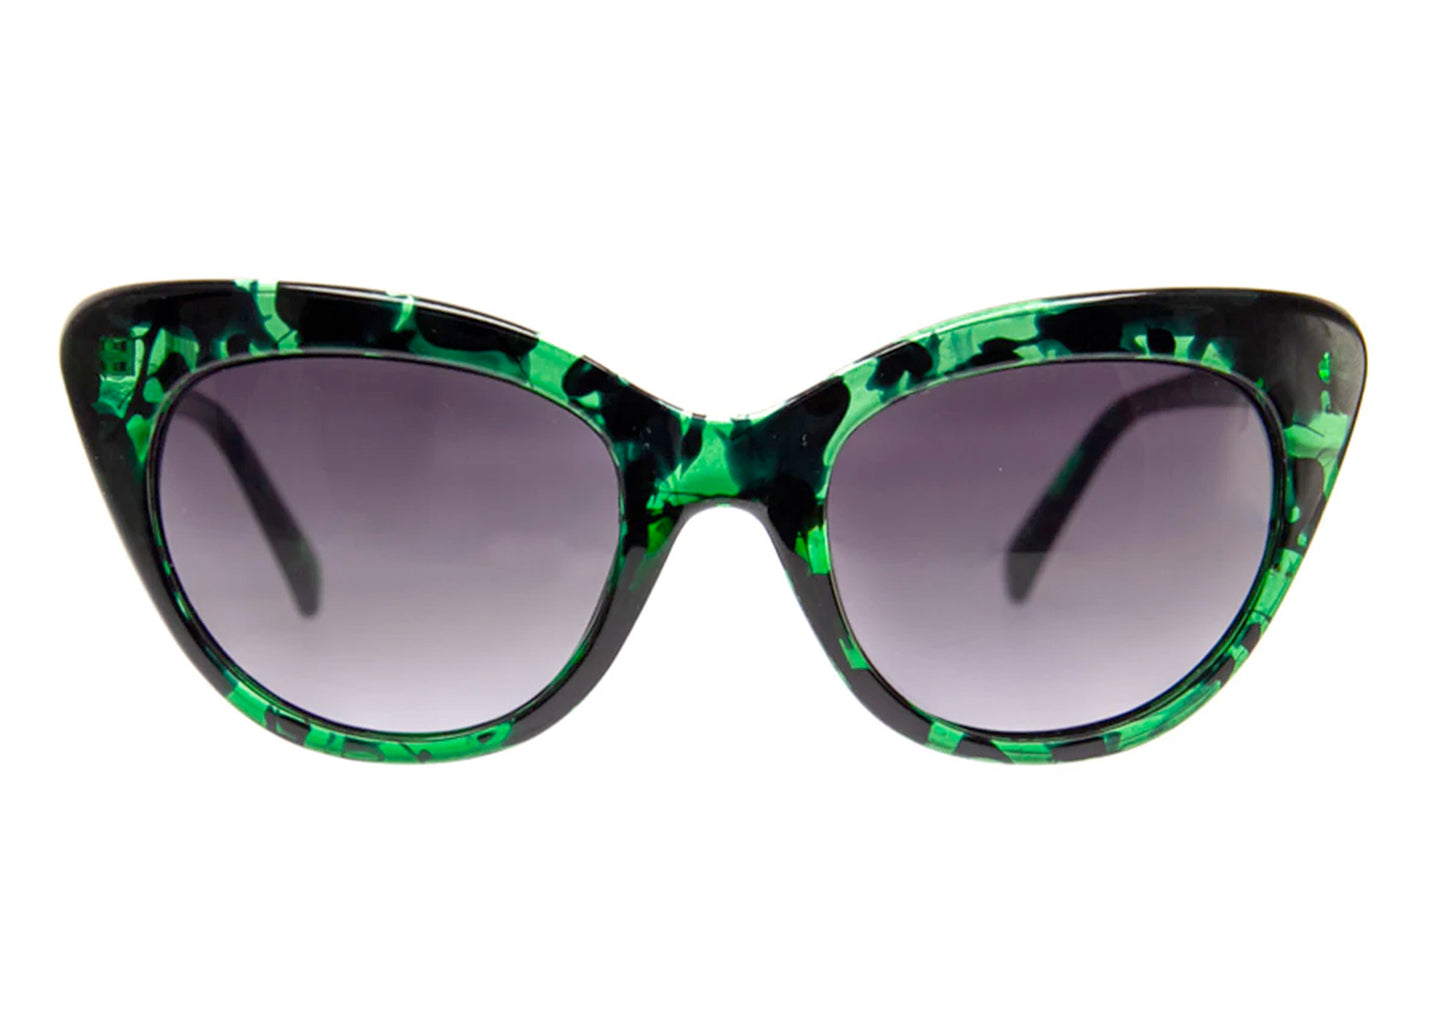 Shimkie Sunglasses in Green Tortoise